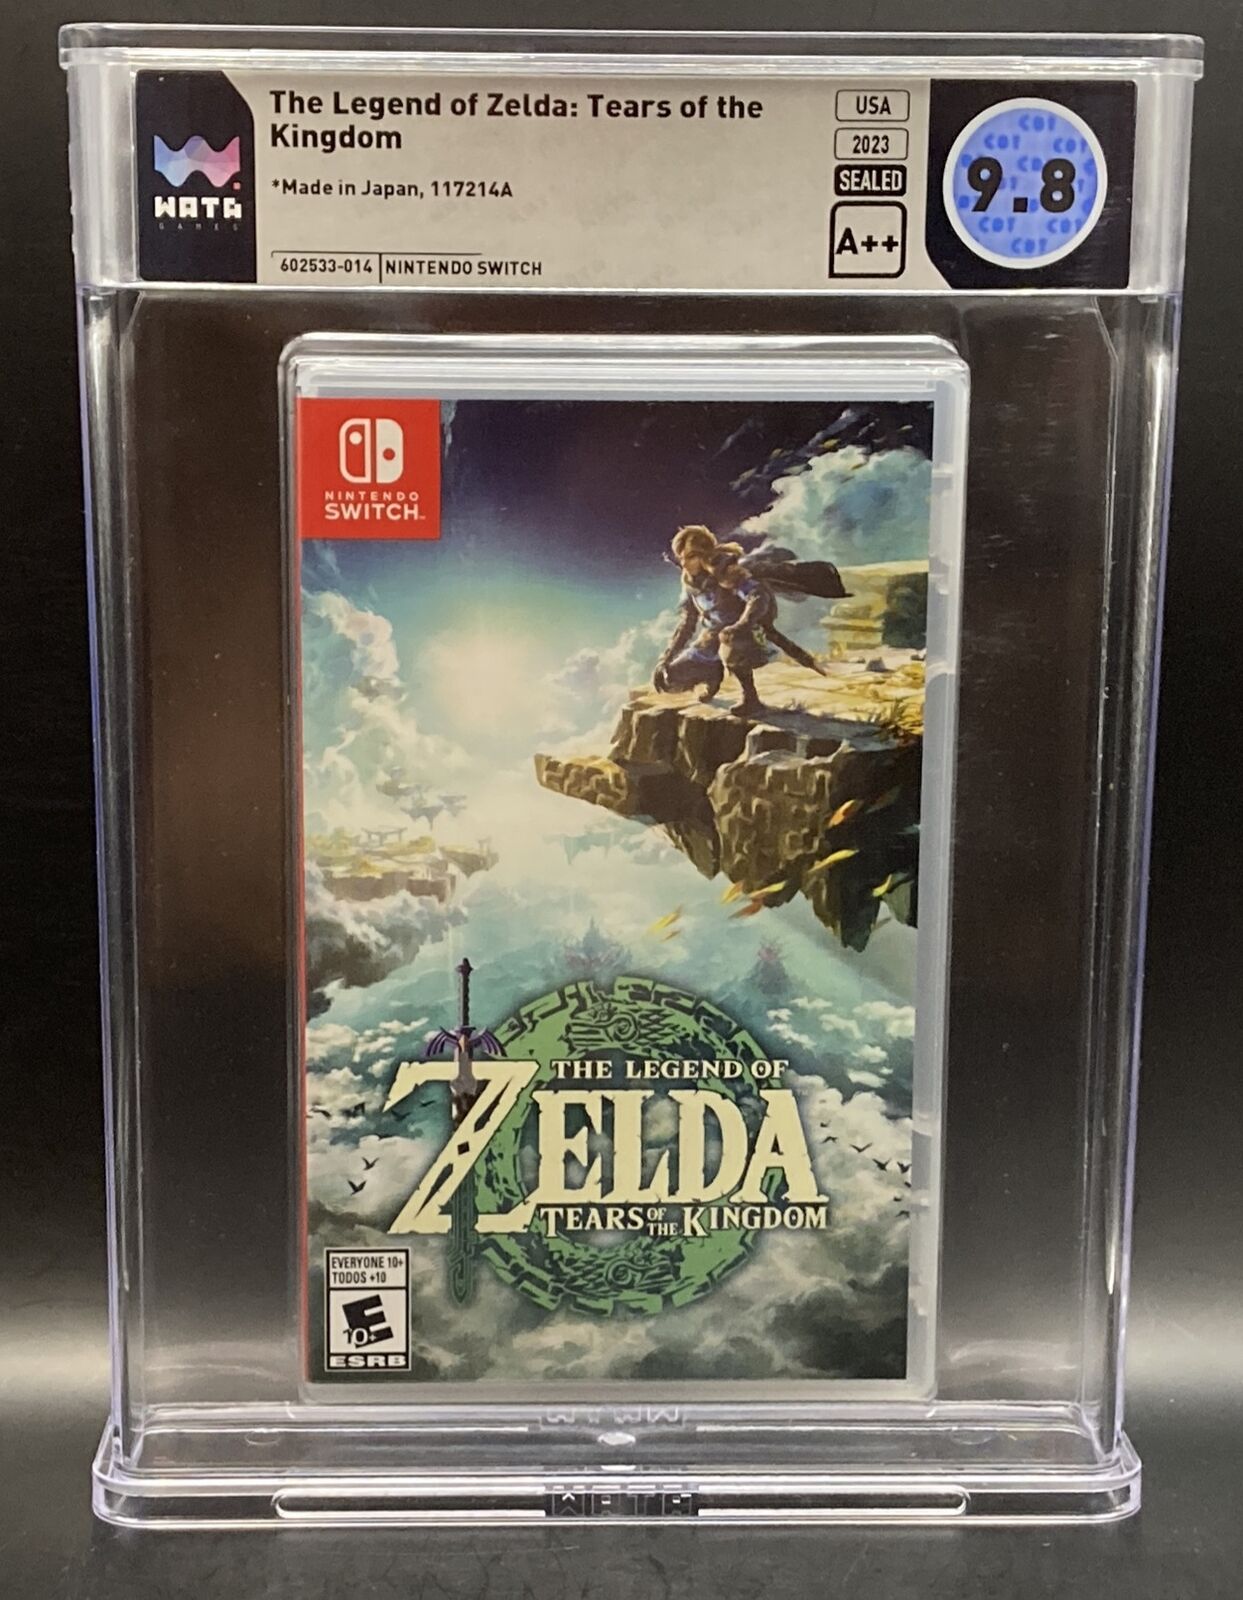 Zelda: Tears of the Kingdom 1st Print WATA 9.8 A++ Nintendo Switch Sealed Game